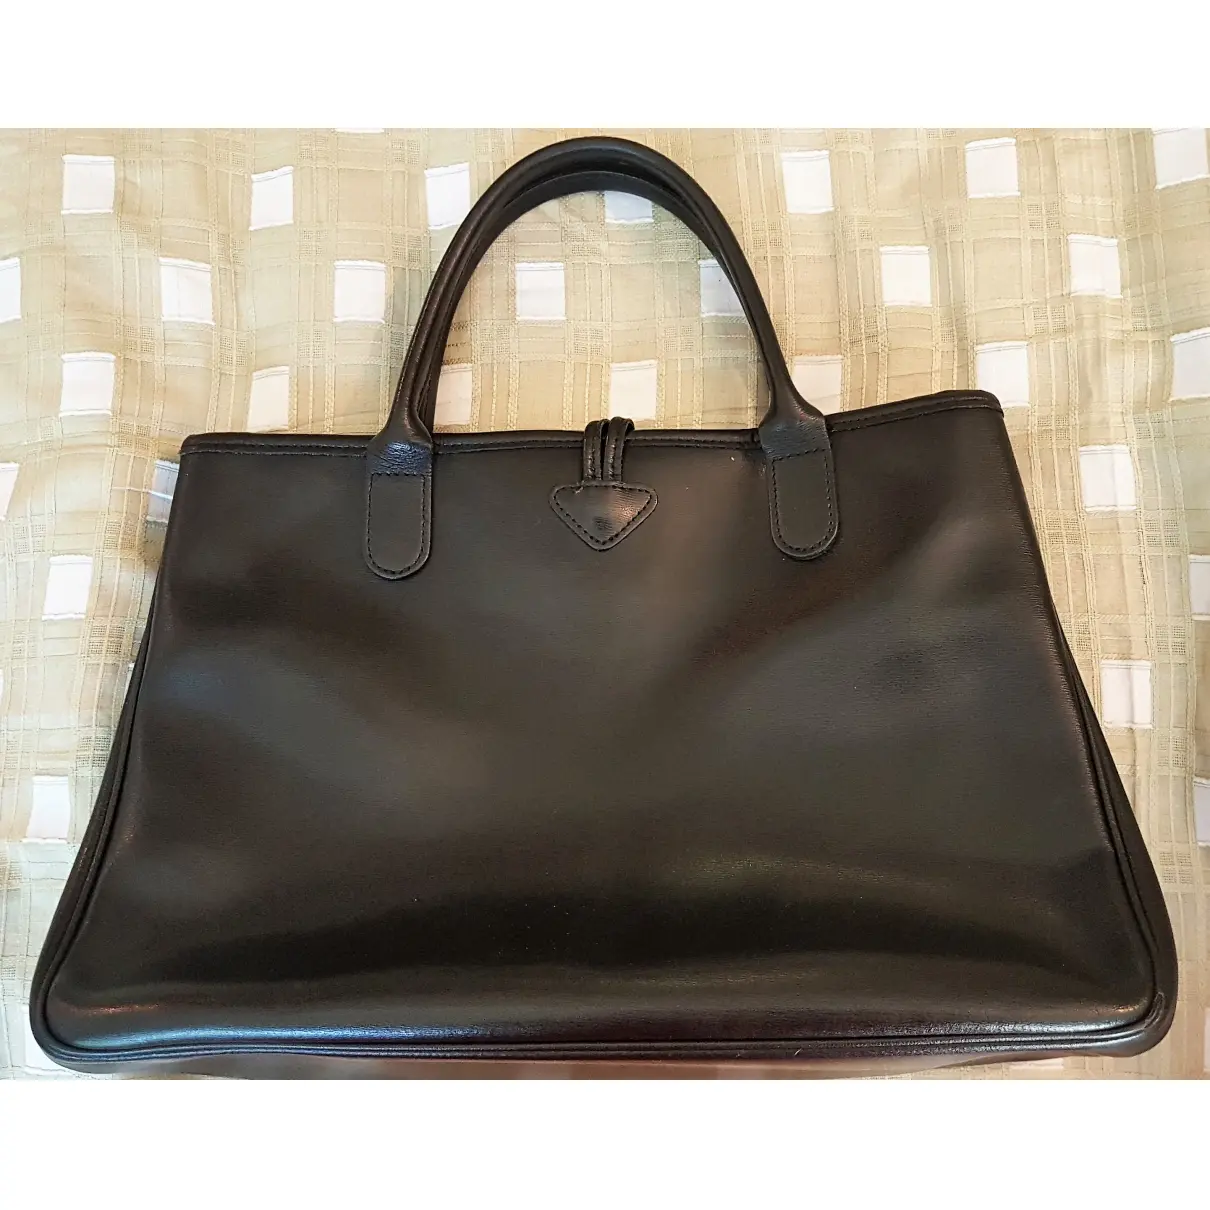 Buy Longchamp Roseau leather handbag online - Vintage